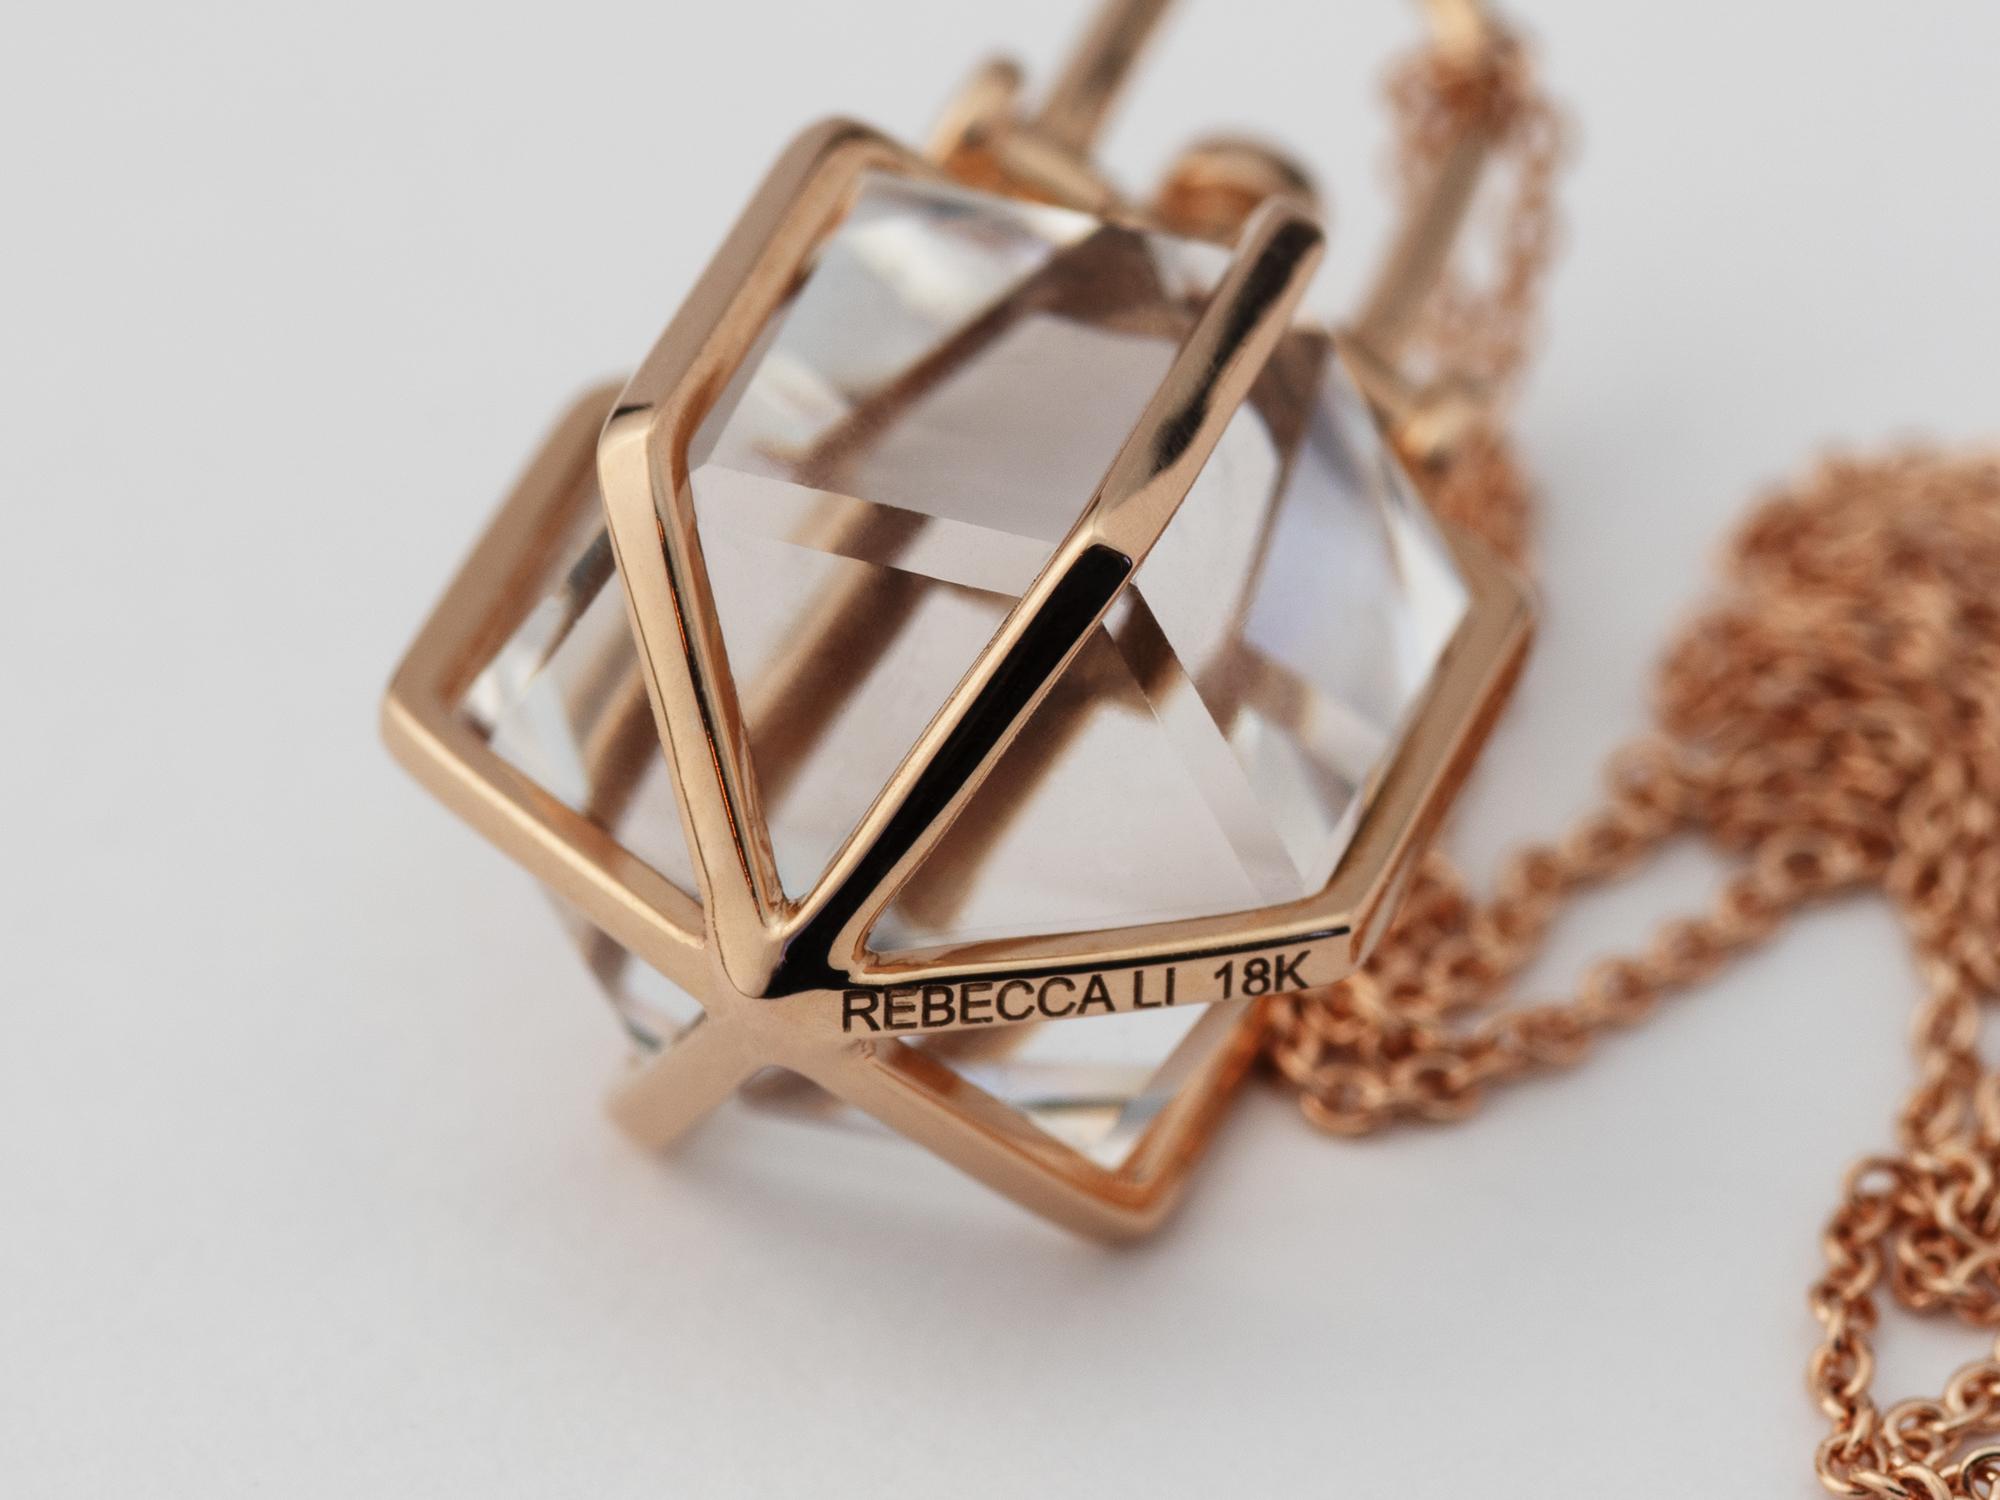 Hexagon Cut Rebecca Li Six Senses Talisman Necklace 18 Karat Gold Large Natural Rock Crystal For Sale